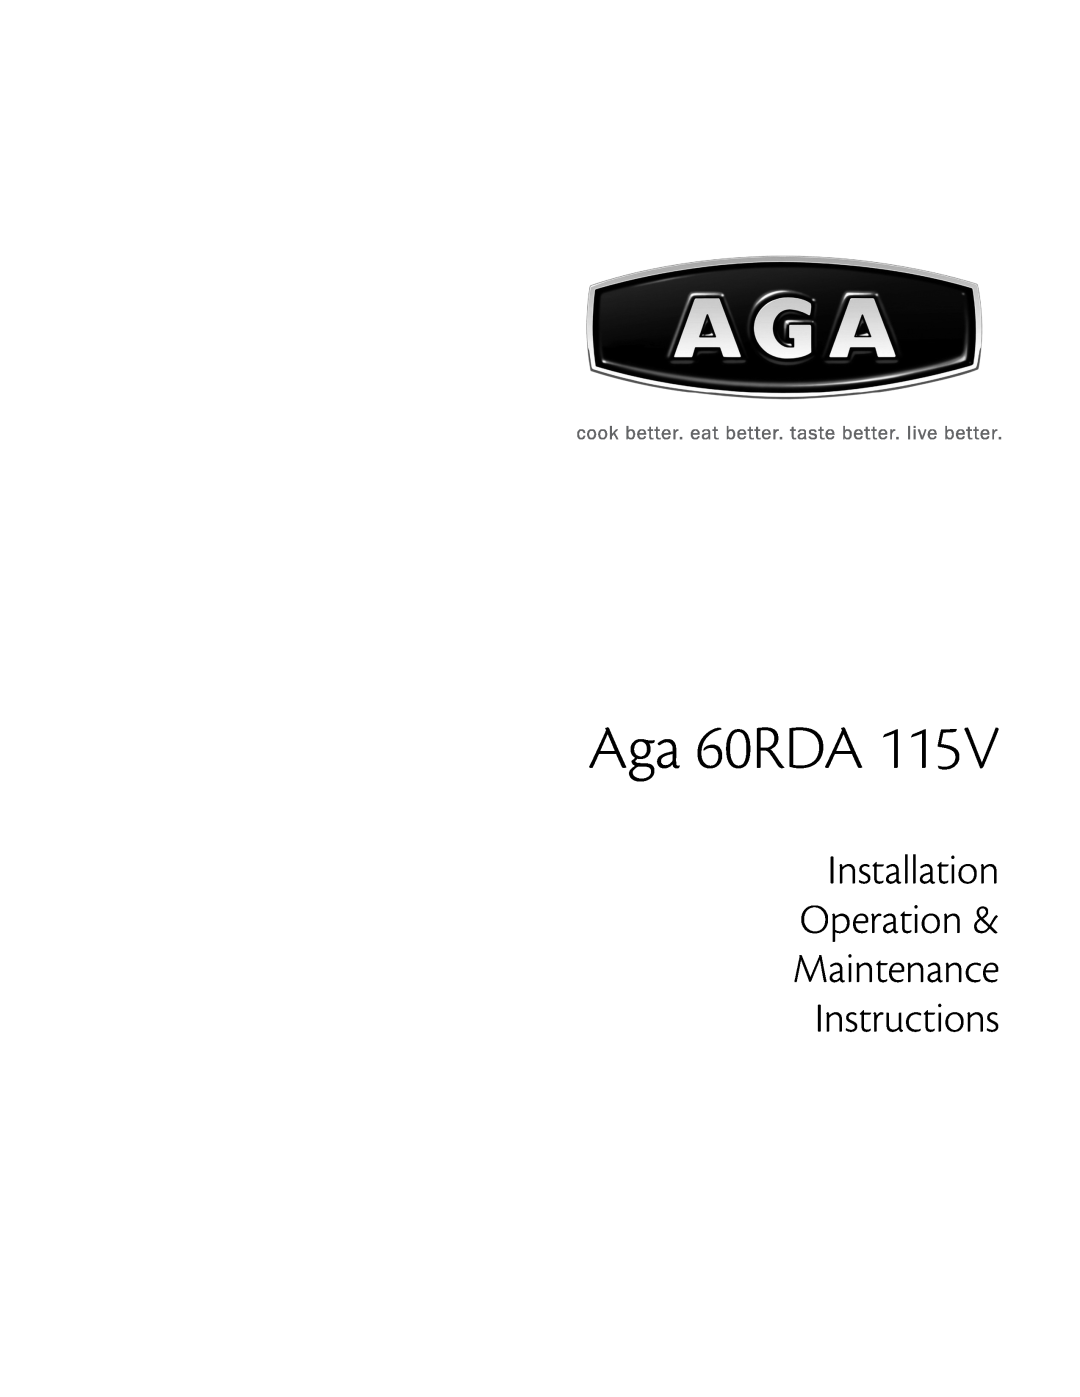 Aga Ranges 60RDA 115V manual Installation Operation & Maintenance Instructions, Aga 60RDA 